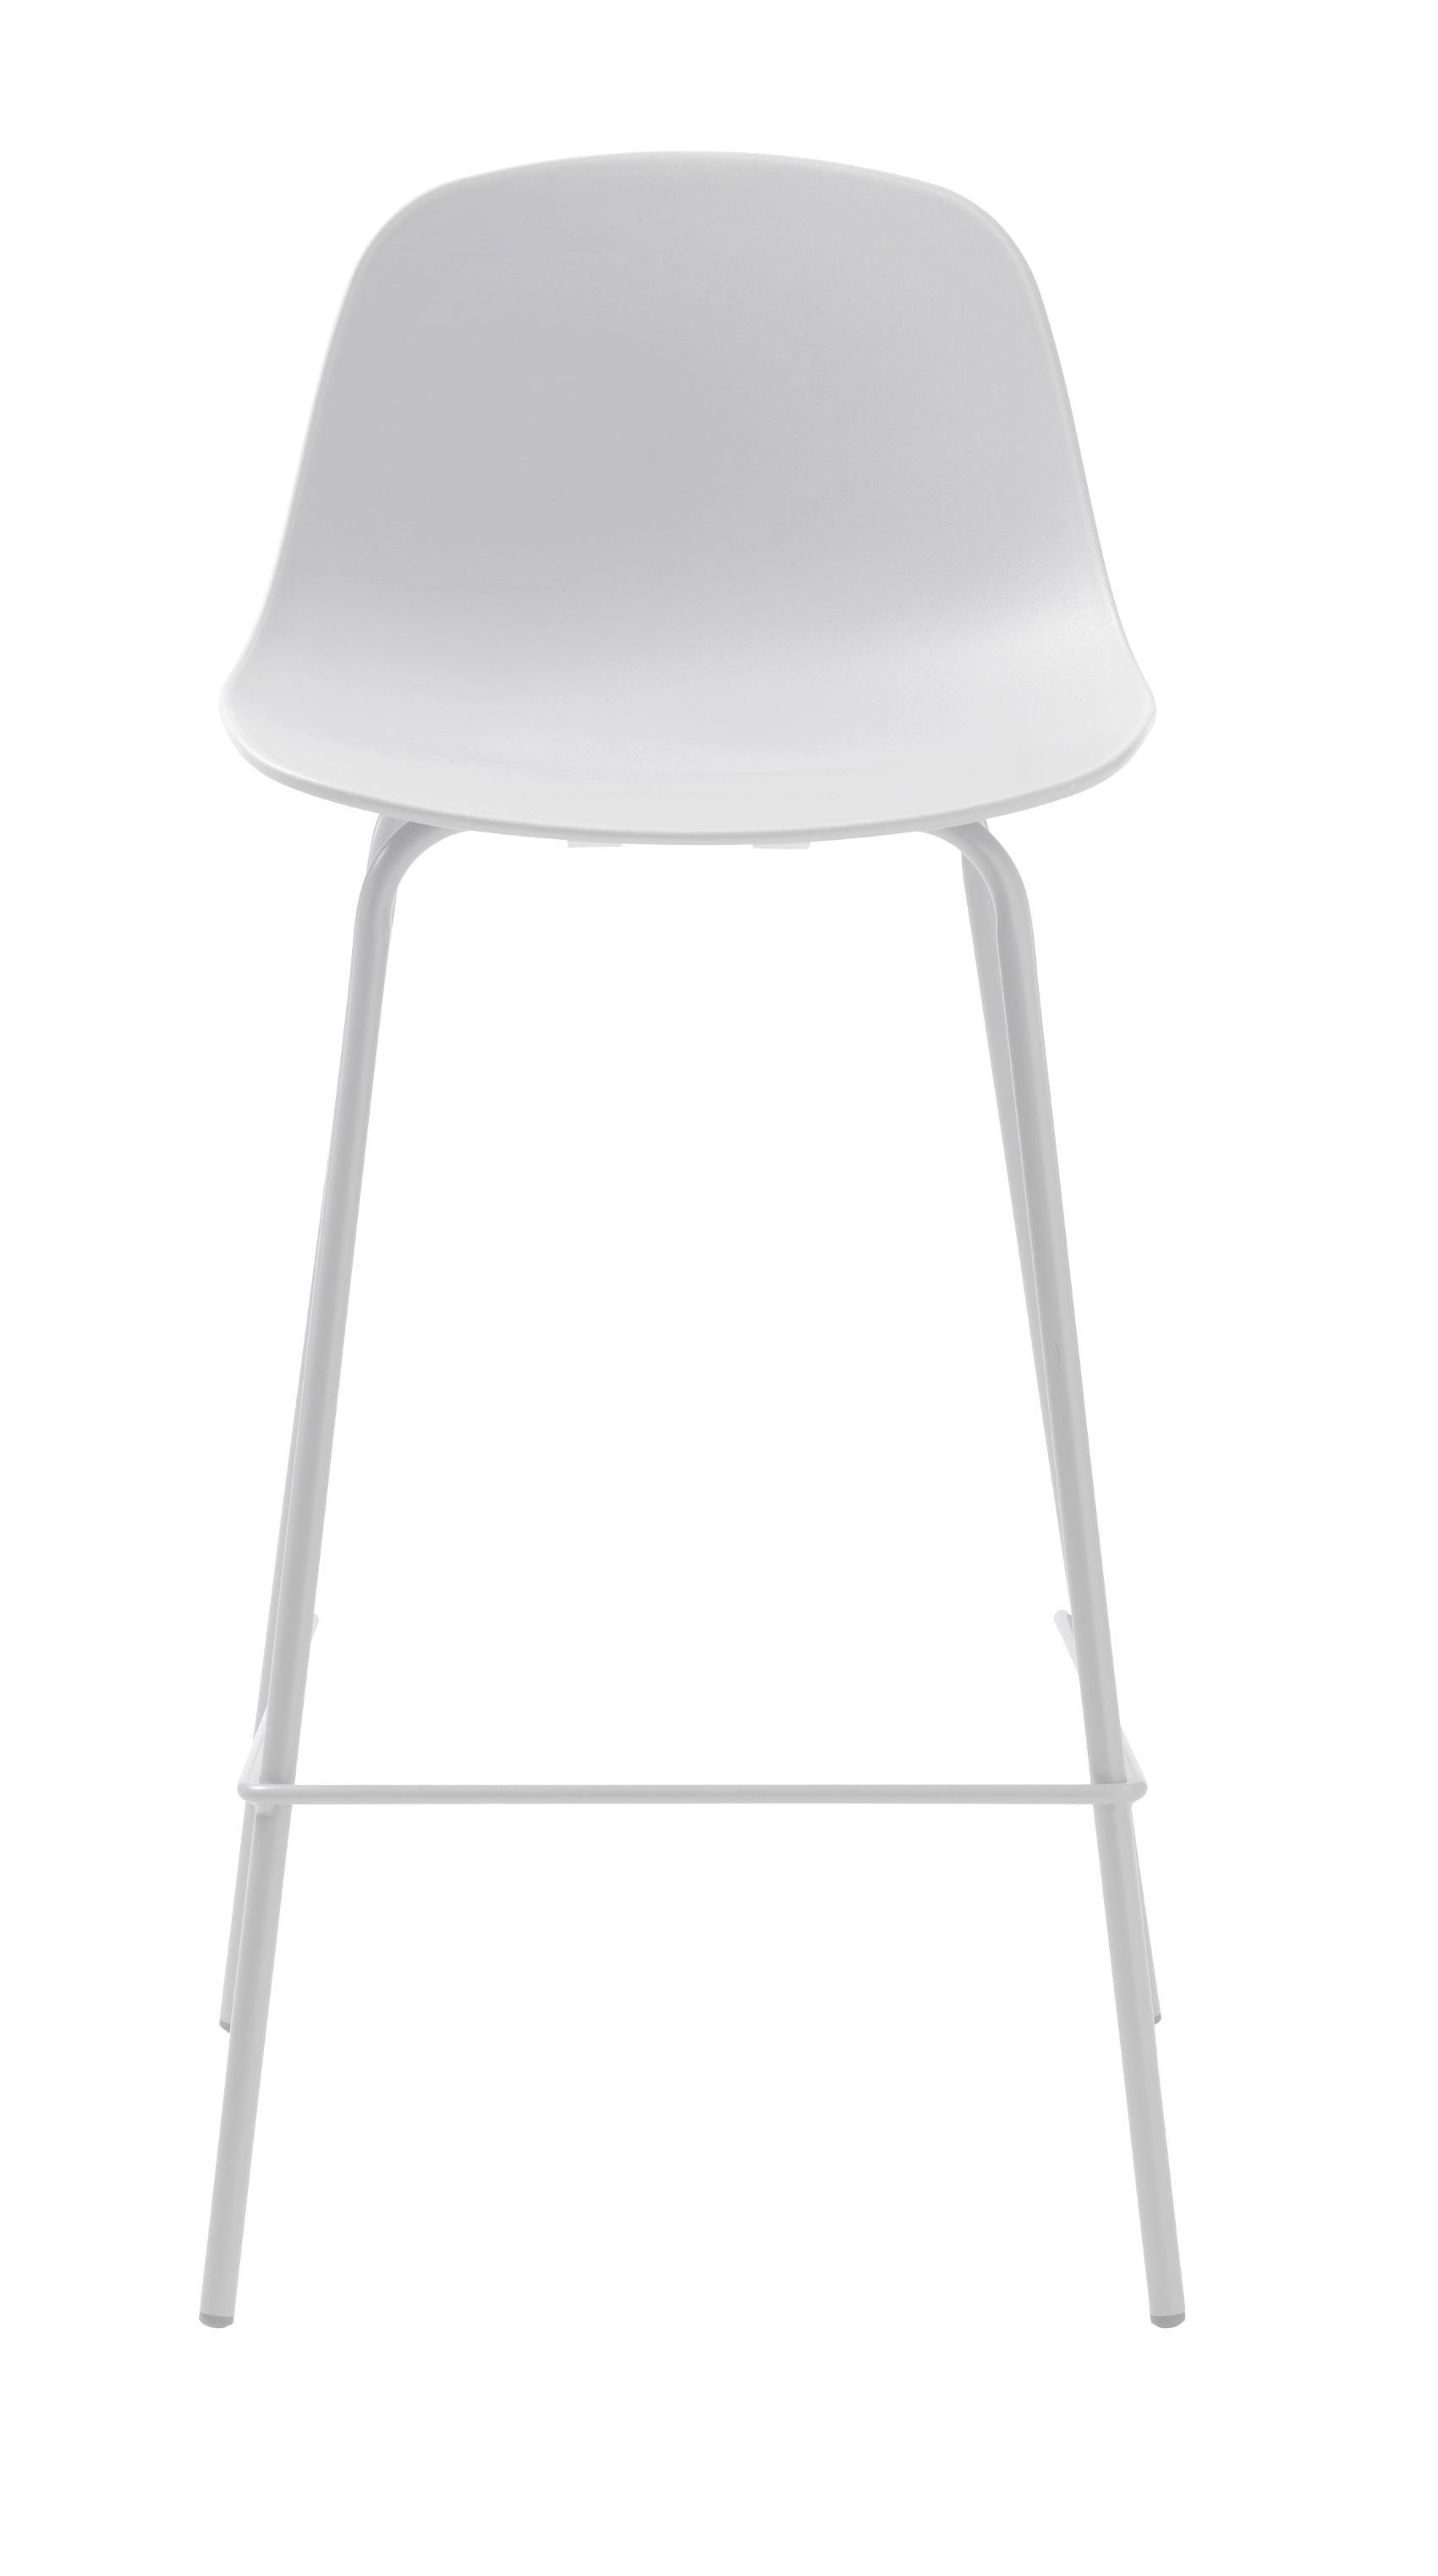 Metall Barhocker Whitby - Kunststoff Sitzschale - skandinavisches Design - weiß